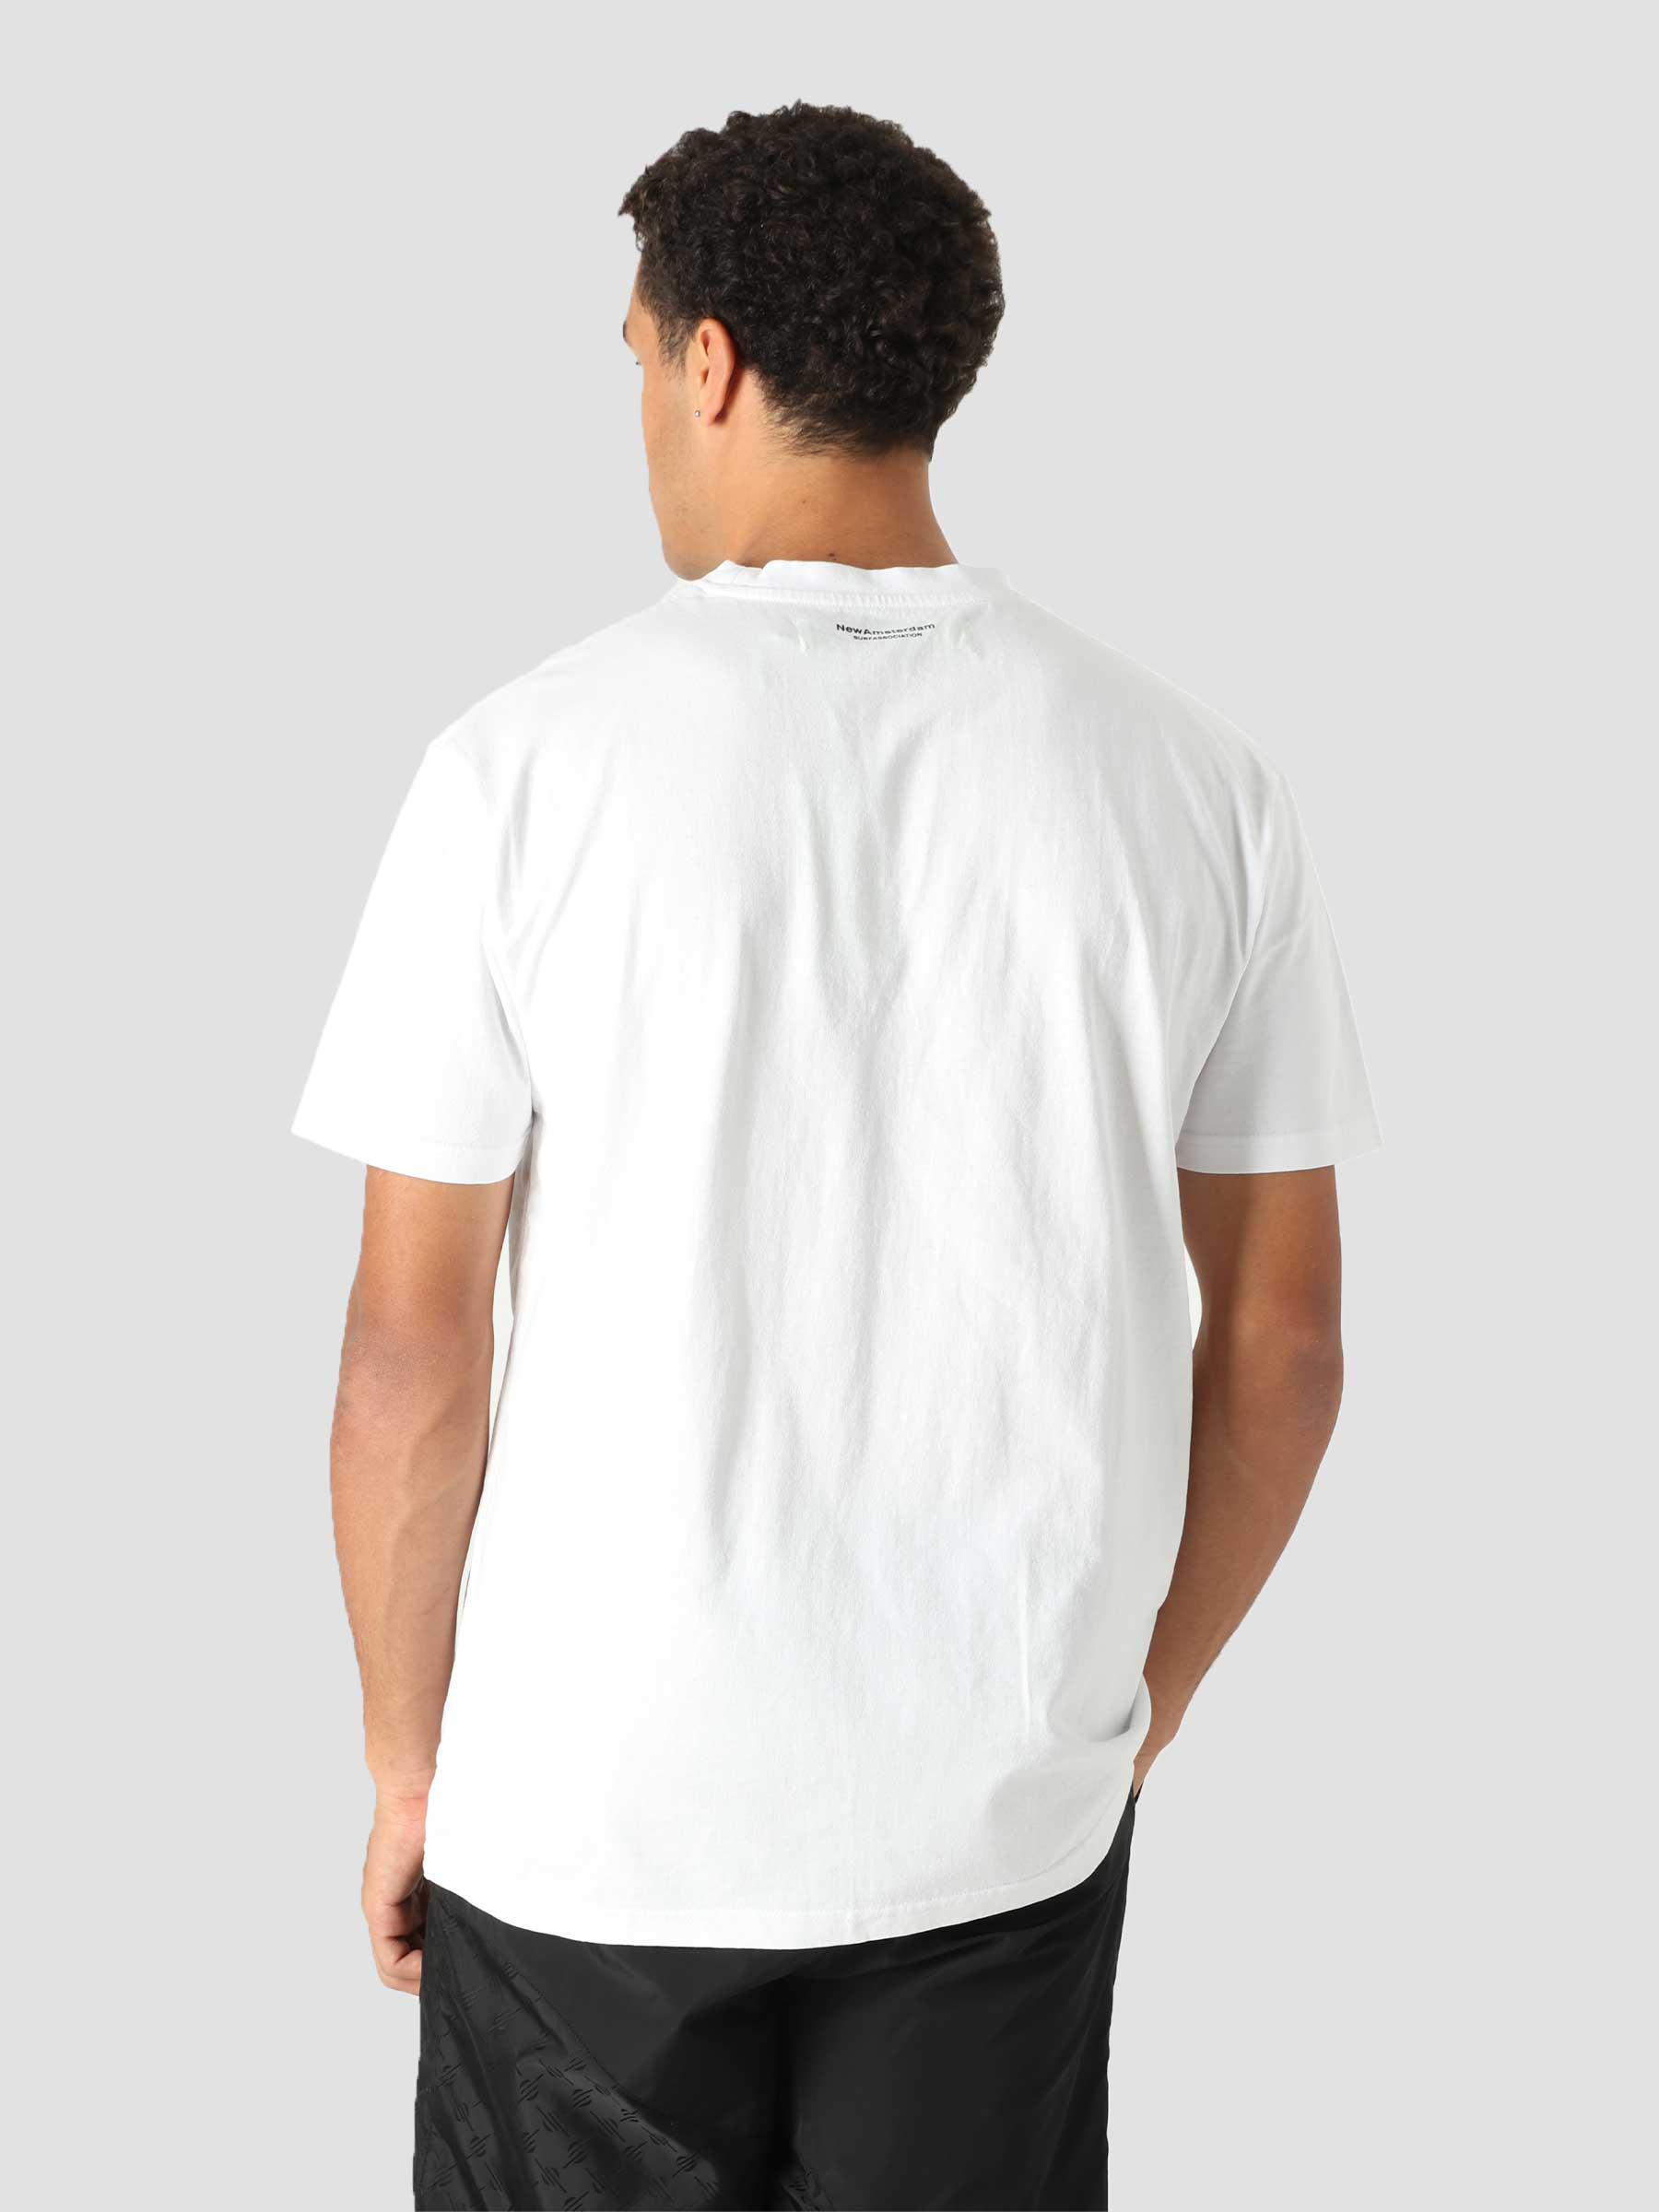 Dice T-Shirt White  2021200